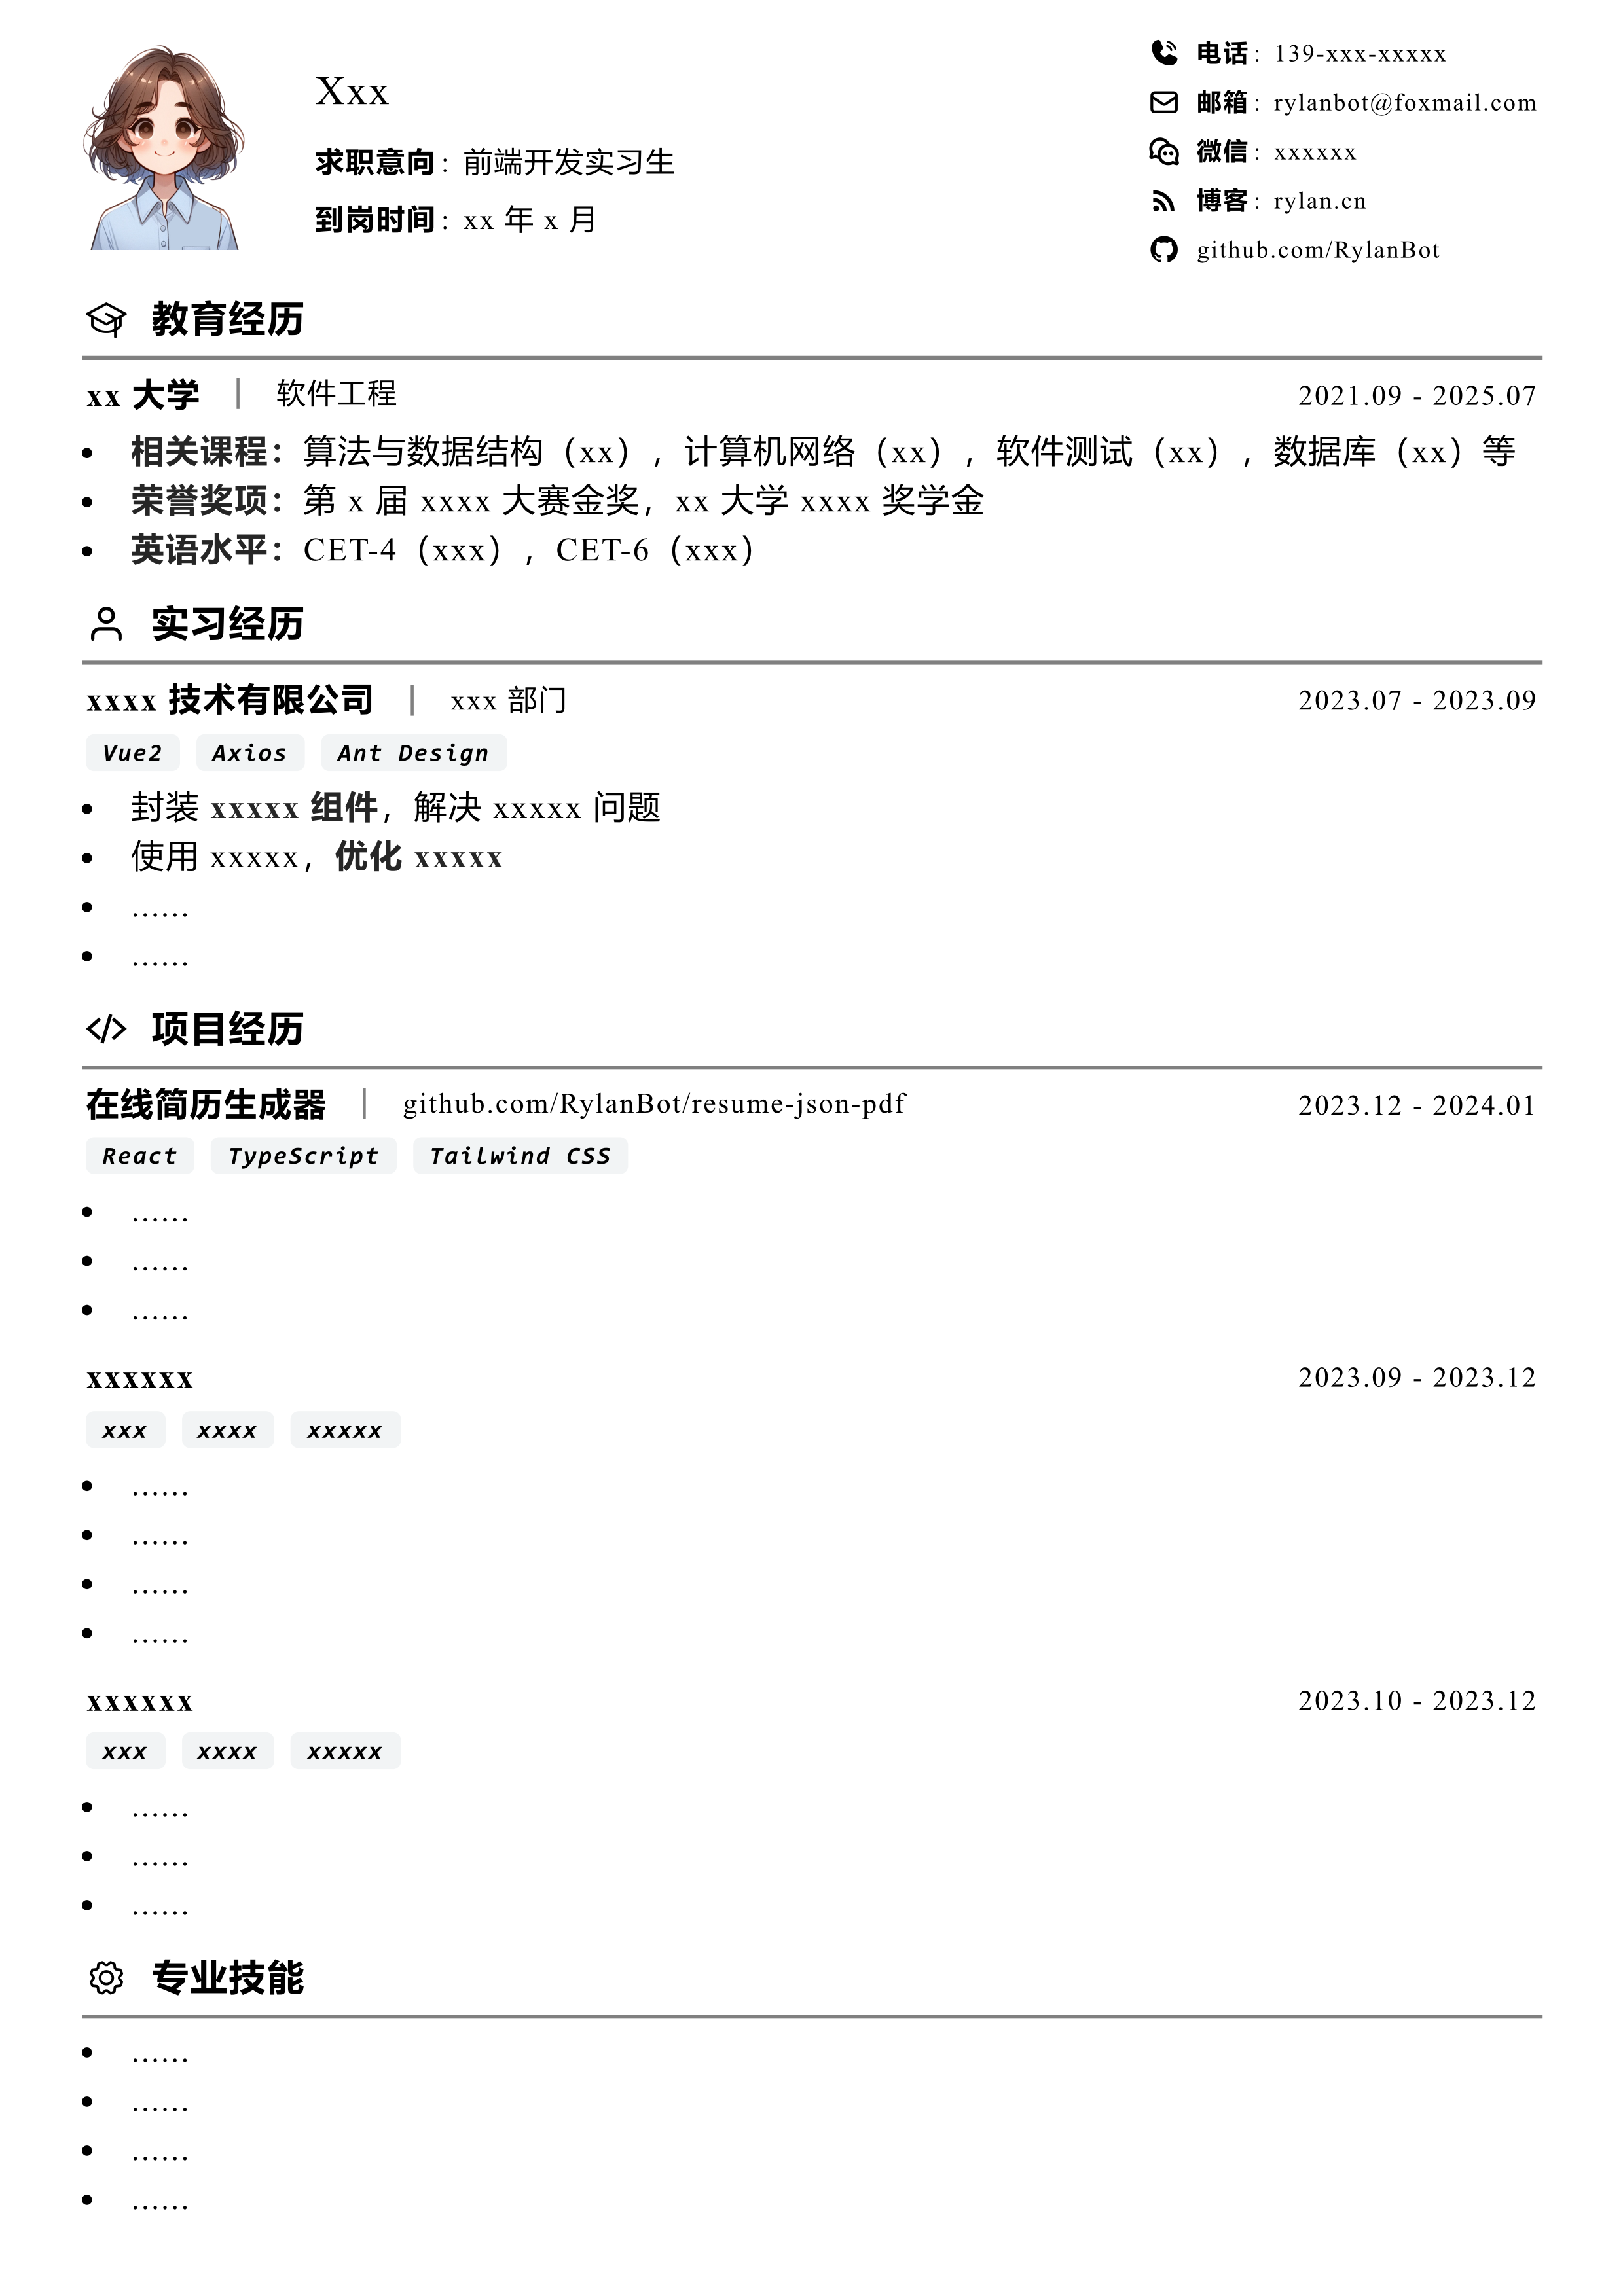 resume-json-pdf-avatar-cn